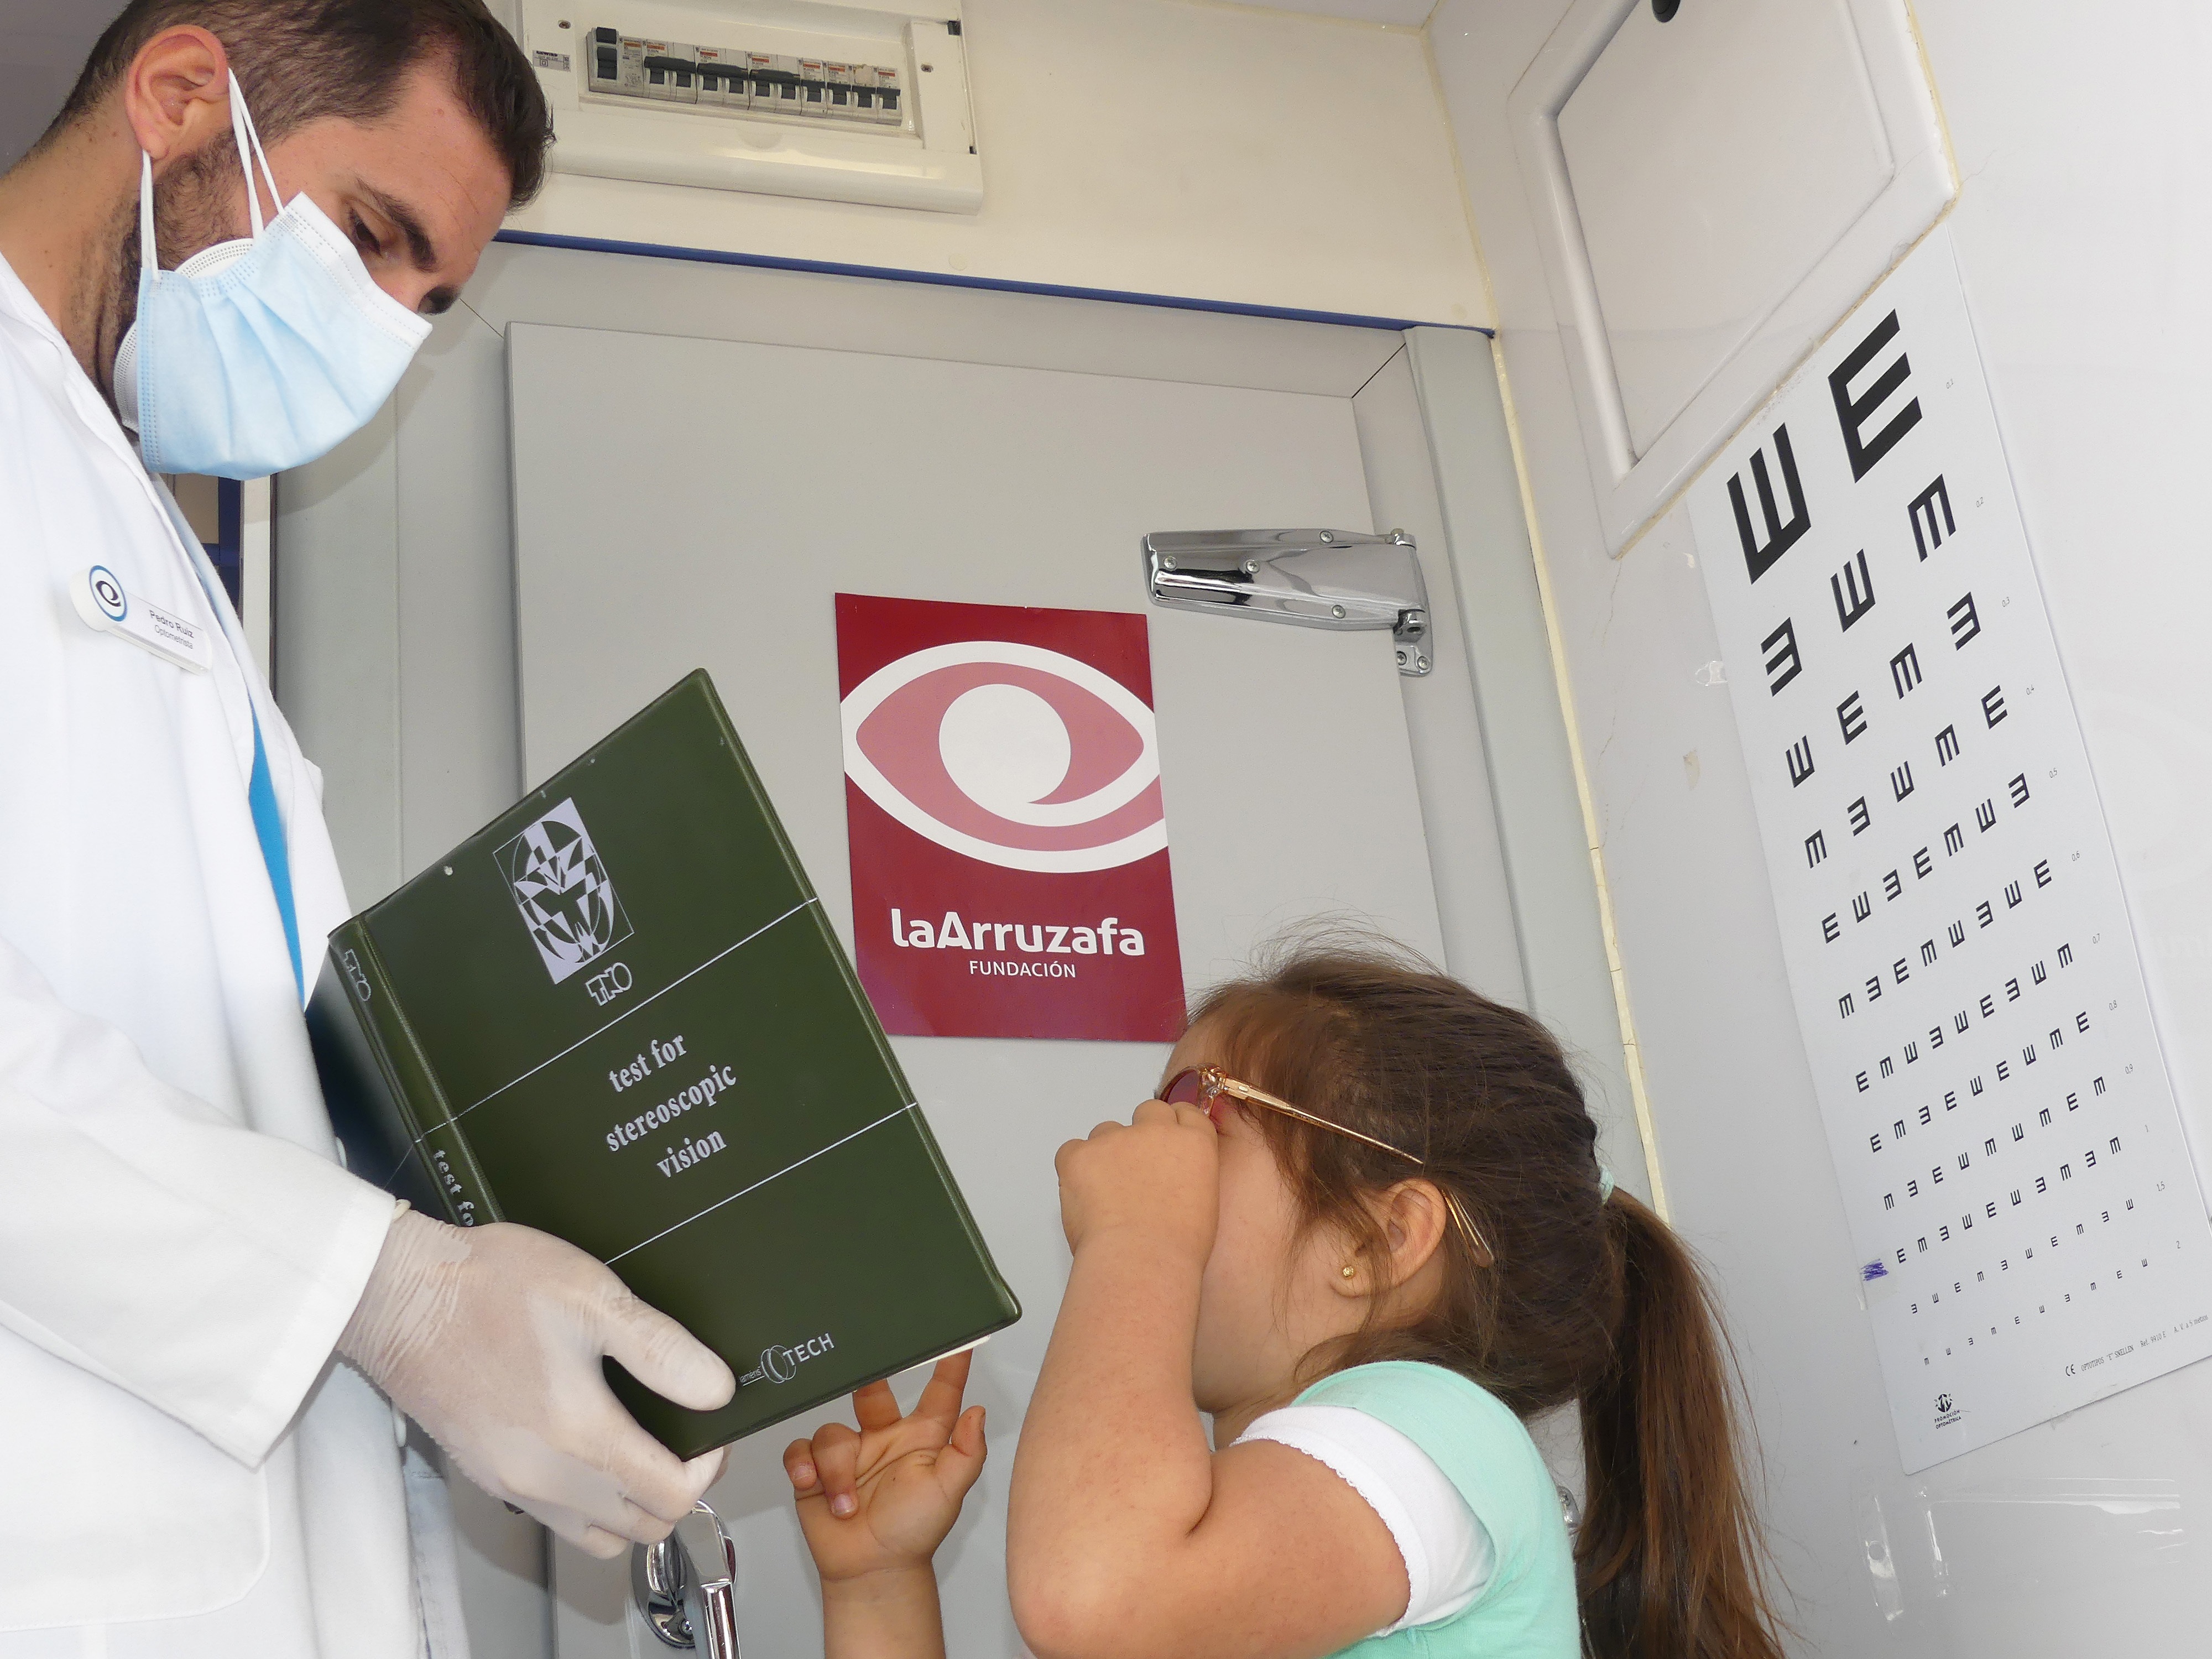 Fundación La Arruzafa, In Collaboration With La Caixa And The City Council, Conducts An Eye Health Review Of 500 School Children